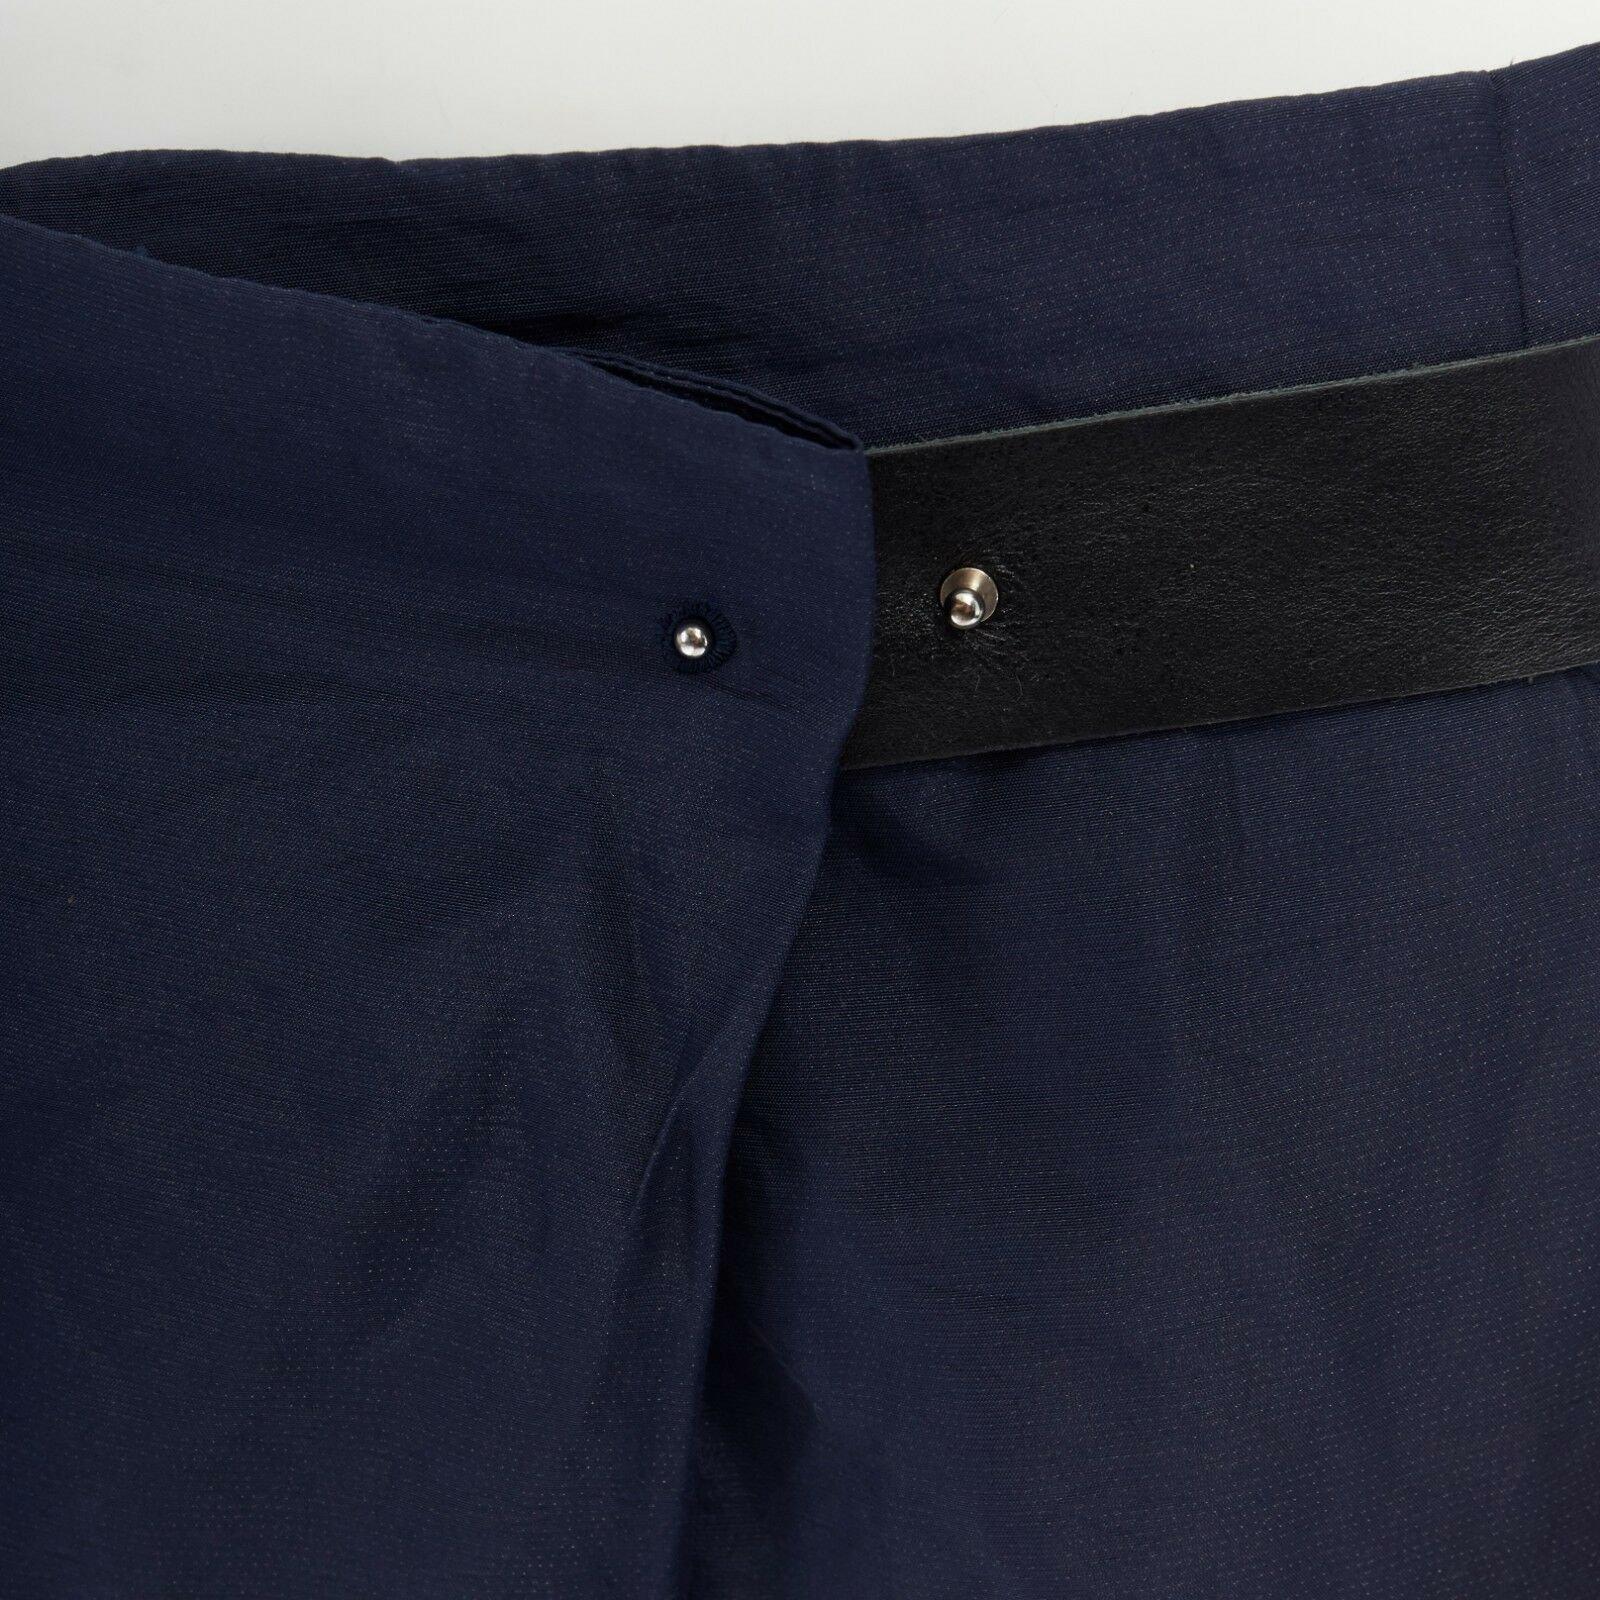 Black TOGA ARCHIVES navy blue faux leather belt fold over waist zip hem pants JP1 S